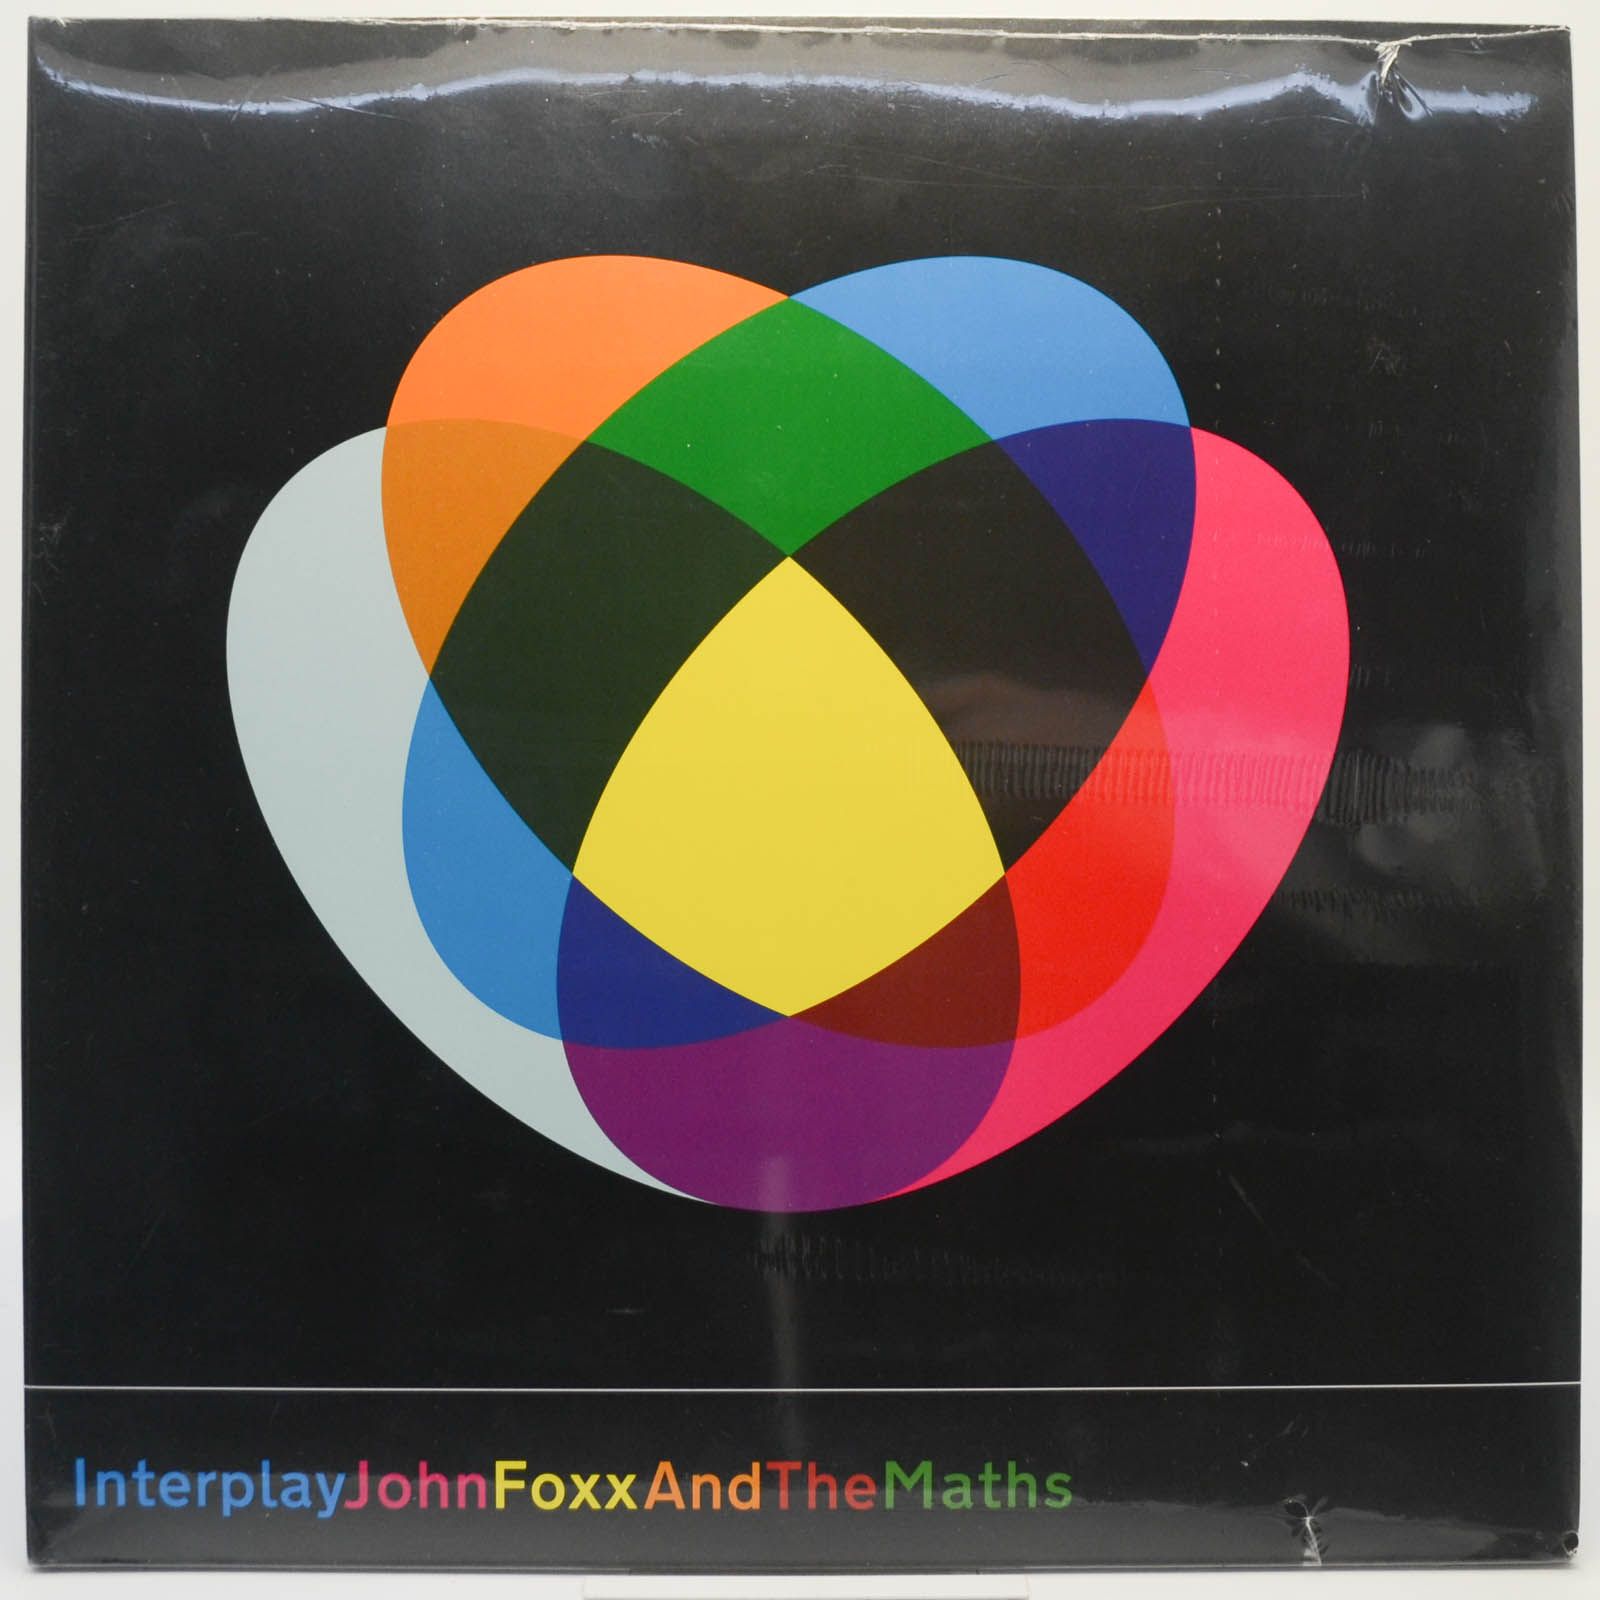 John Foxx And The Maths — Interplay (UK), 2011